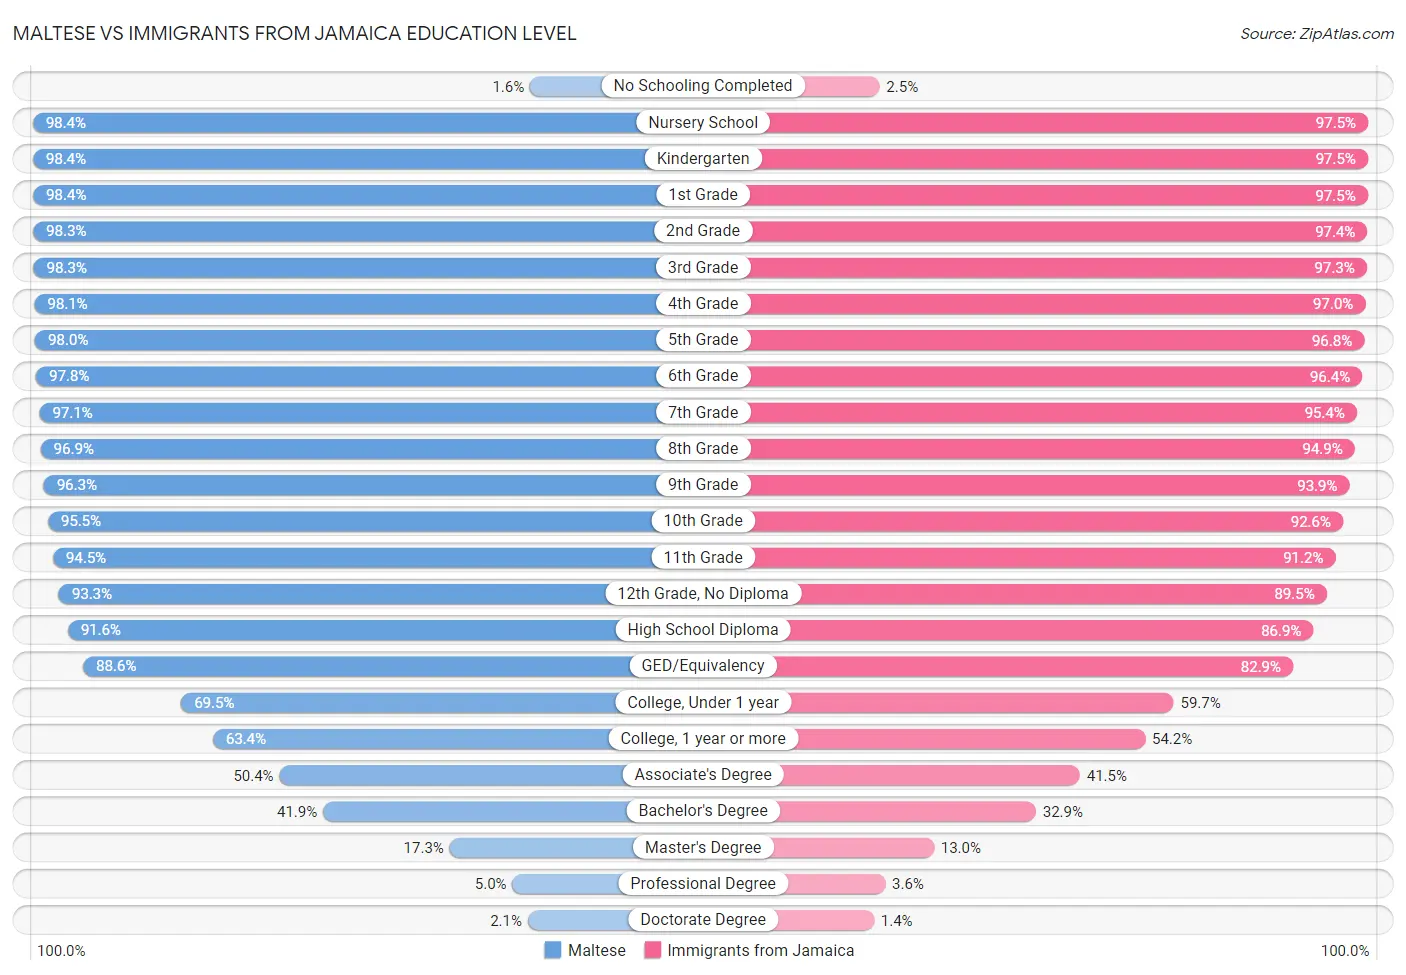 Maltese vs Immigrants from Jamaica Education Level